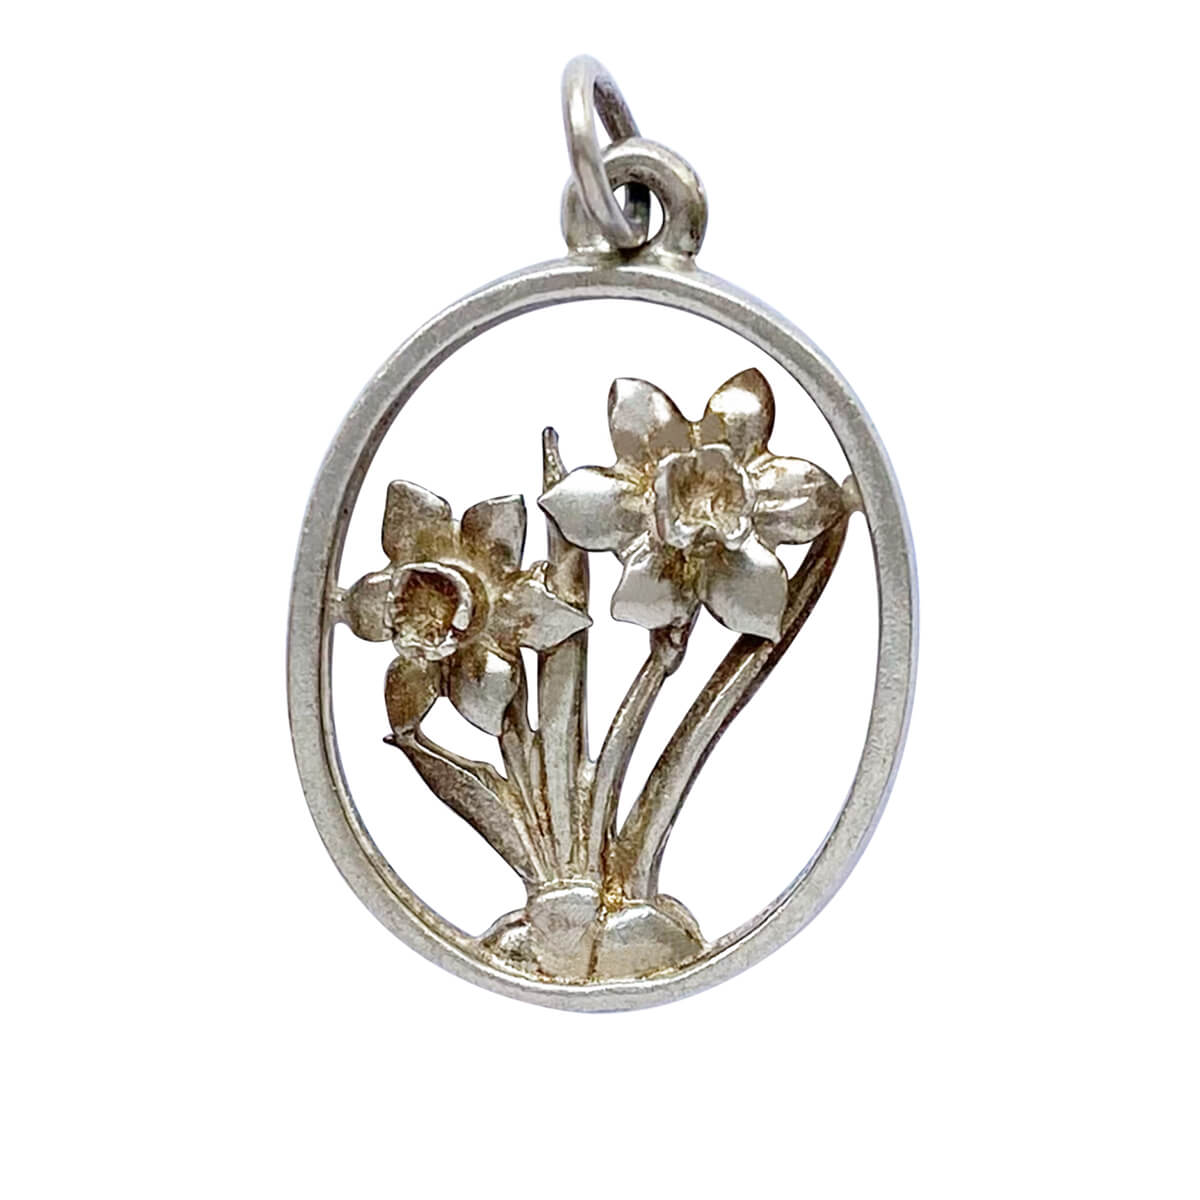 Vintage daffodil flowers charm sterling silver pendant from Charmarama Welsh symbol Birmingham silver